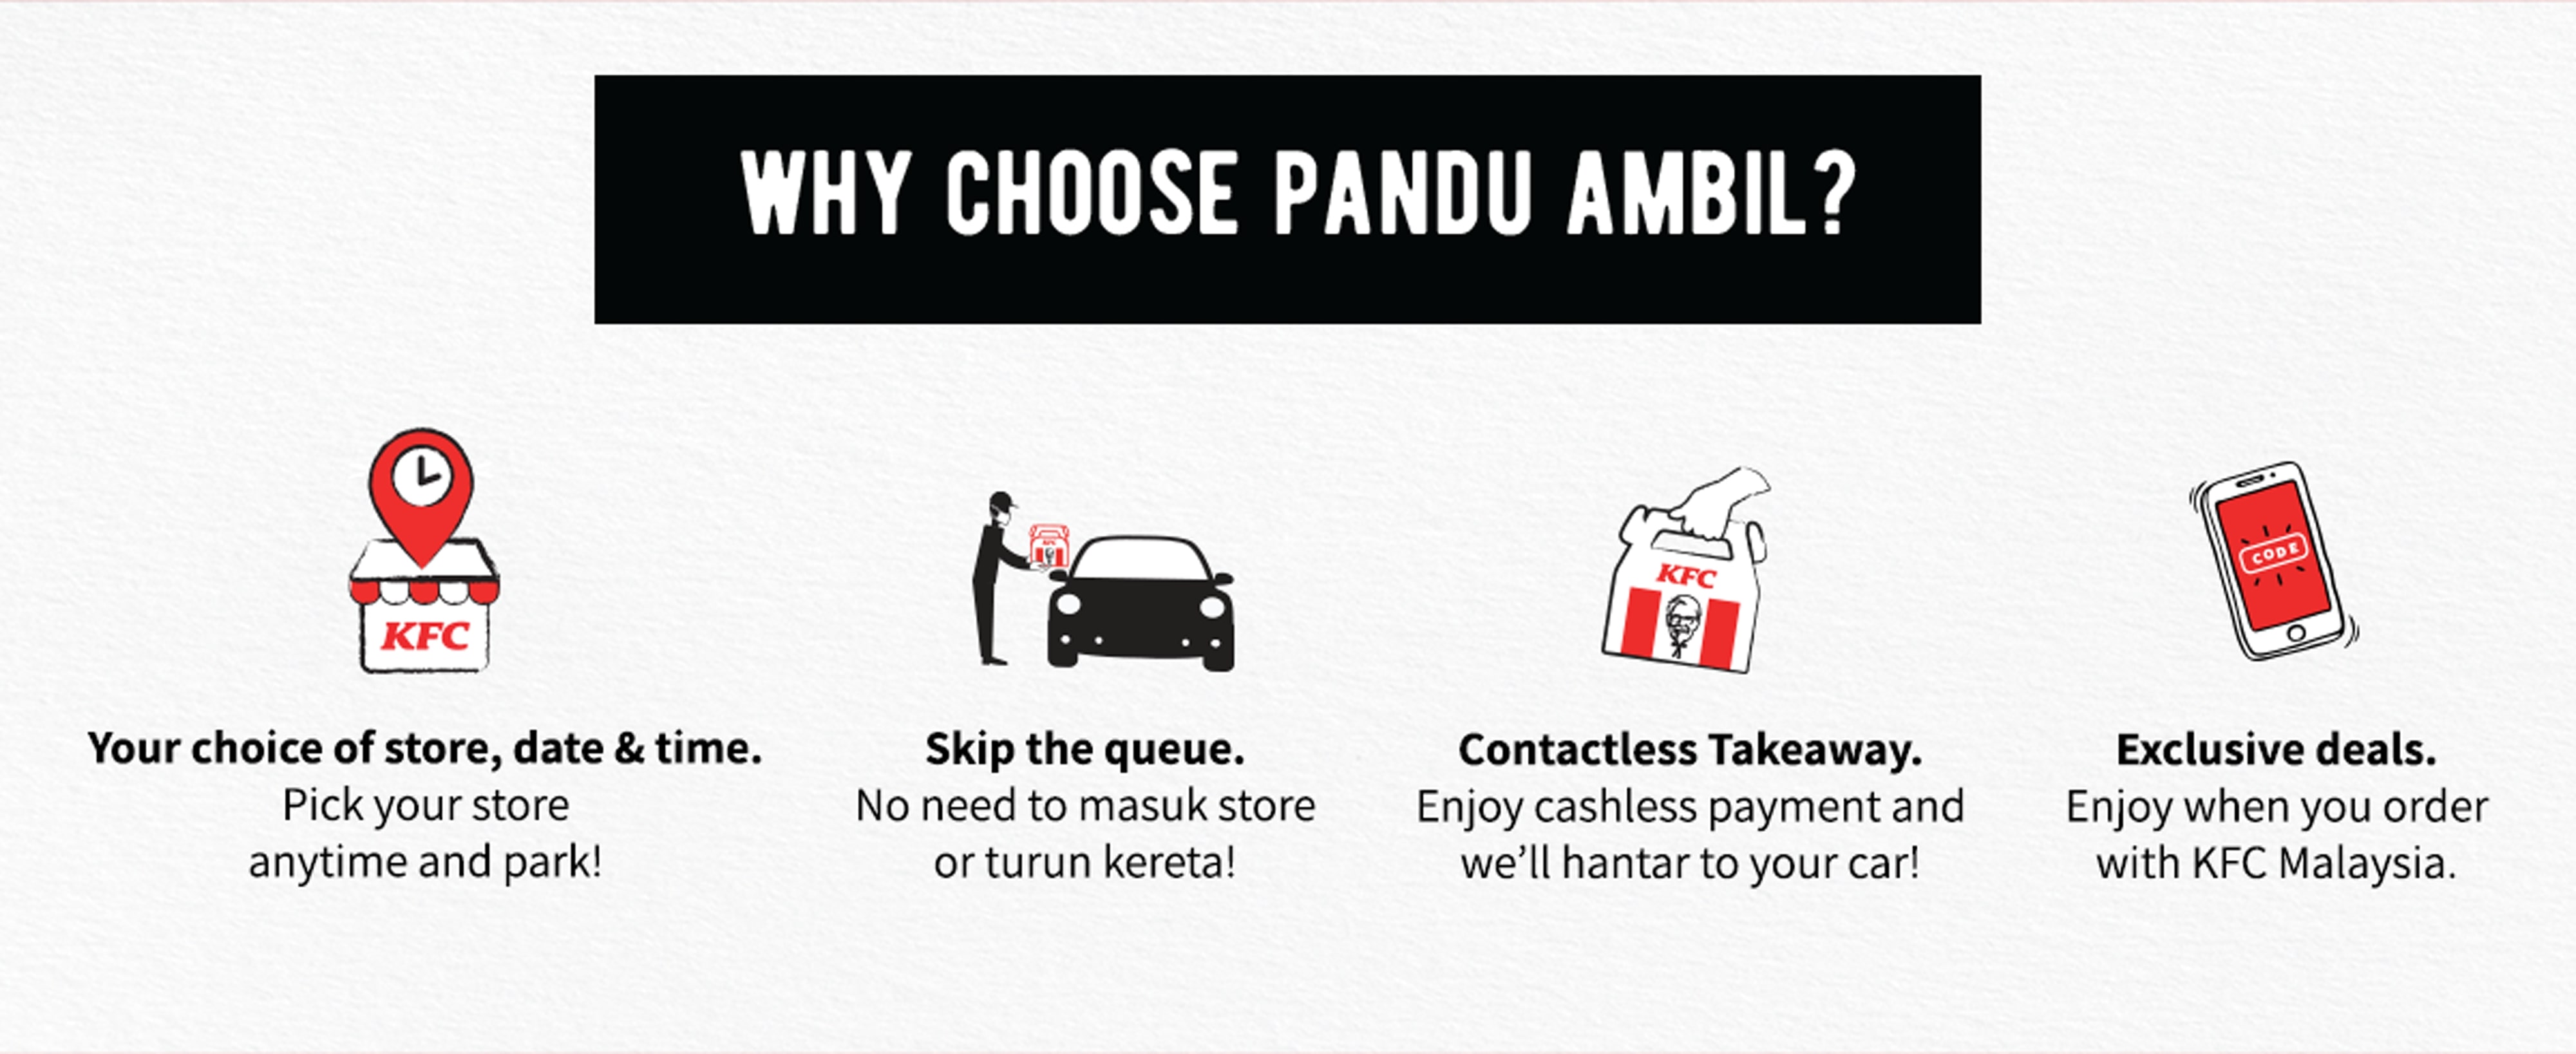 Pandu Ambil仅为透过大马KFC手机应用程序或KFC官网订餐的网络订单提供服务。-KFC提供-